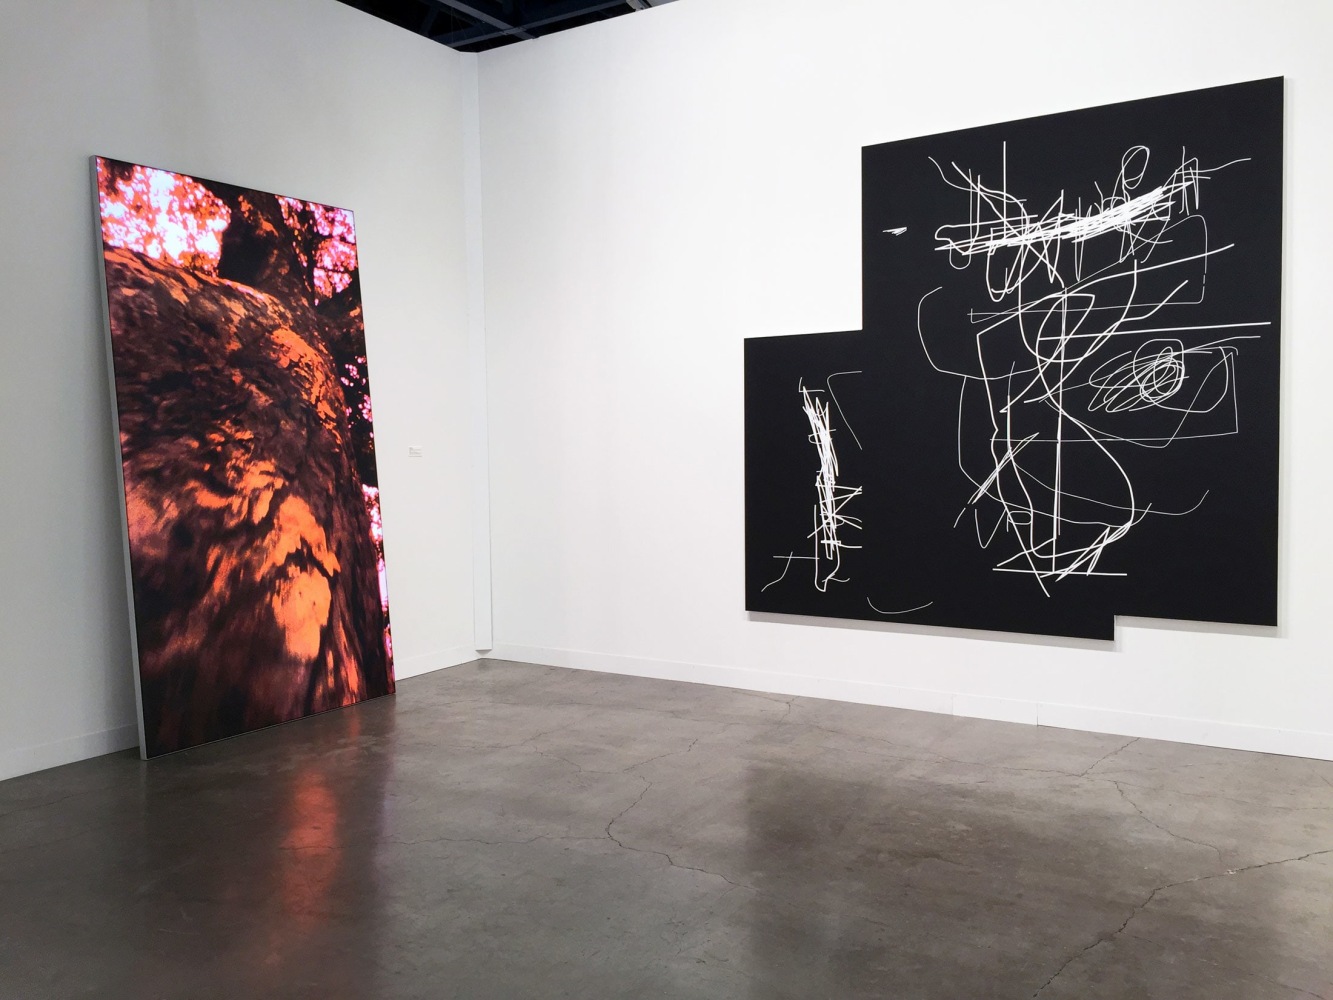 Luhring Augustine&amp;nbsp;

Art Basel Miami Beach&amp;nbsp;

Installation view&amp;nbsp;

2014

Pictured: Pipilotti Rist, Jeff Elrod